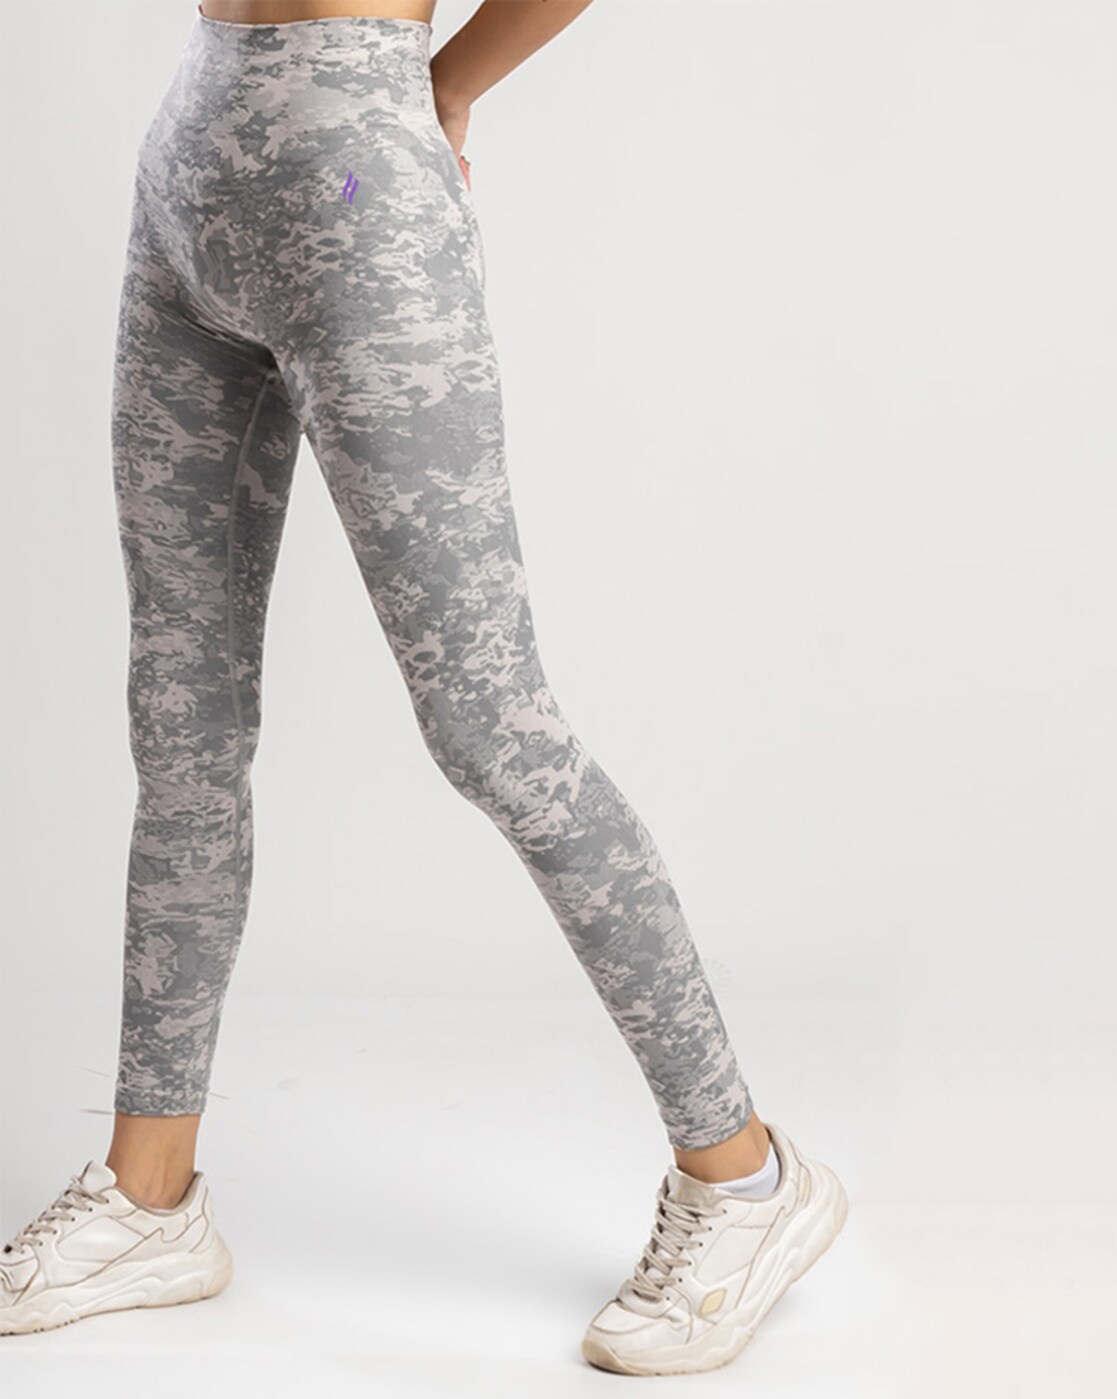 Buy Grey Leggings for Women by Sknz Online